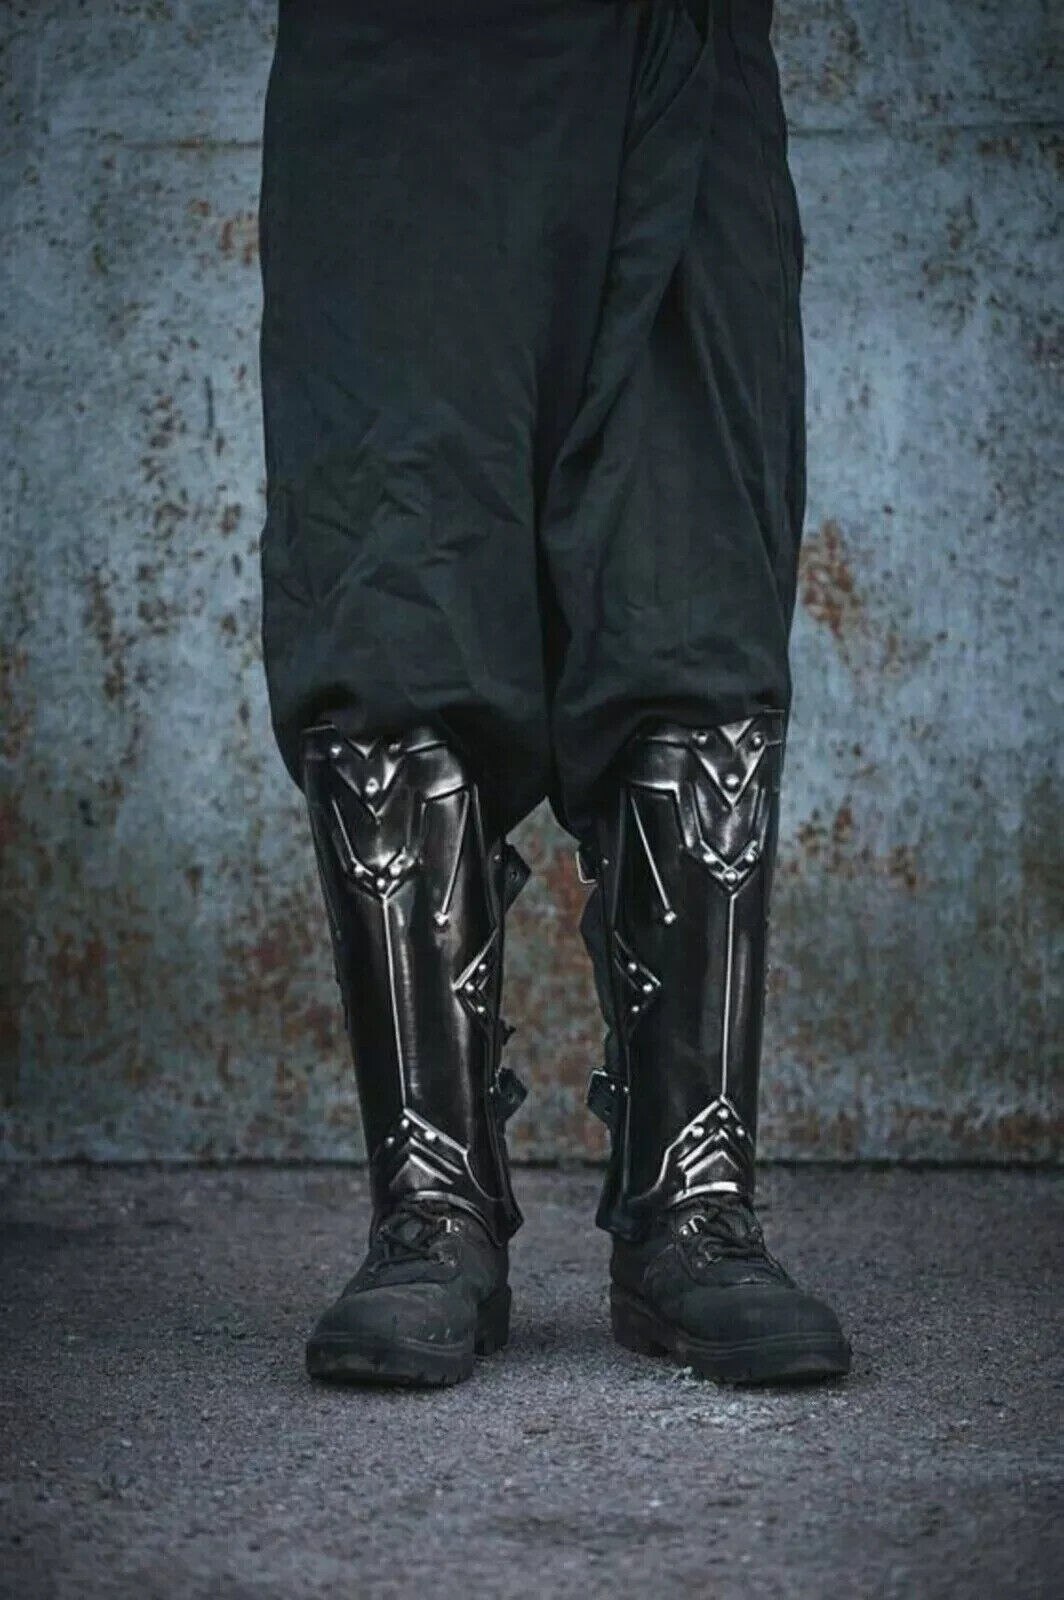 Medieva LARP Armor Legs Protection - Blackened Dwarf Style Greaves - Armor